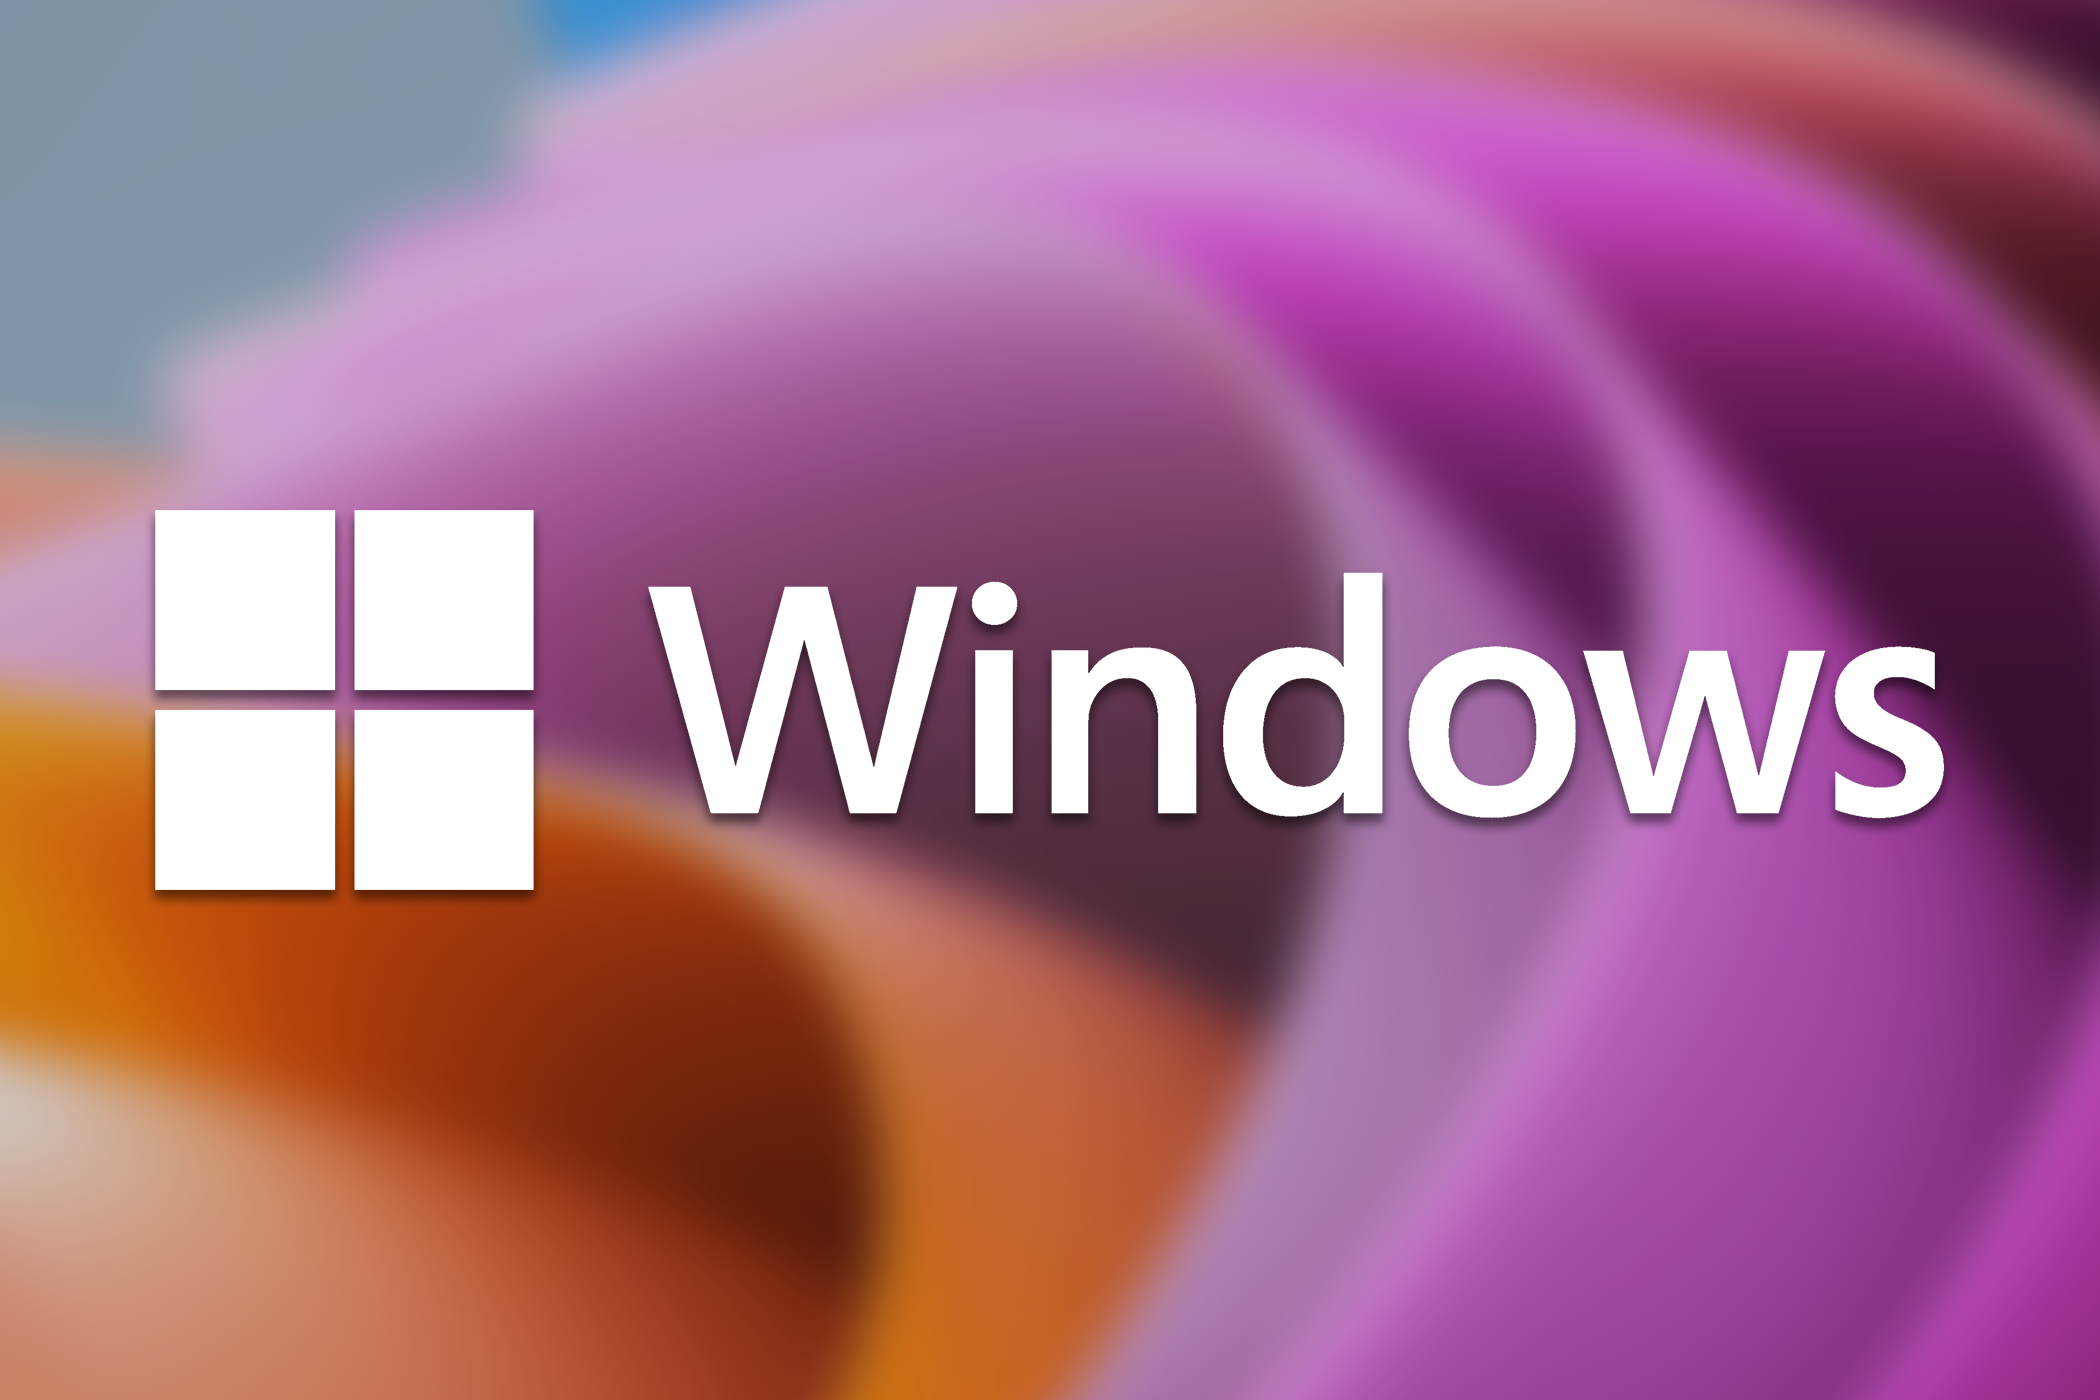 The Windows logo over a blurry desktop background.